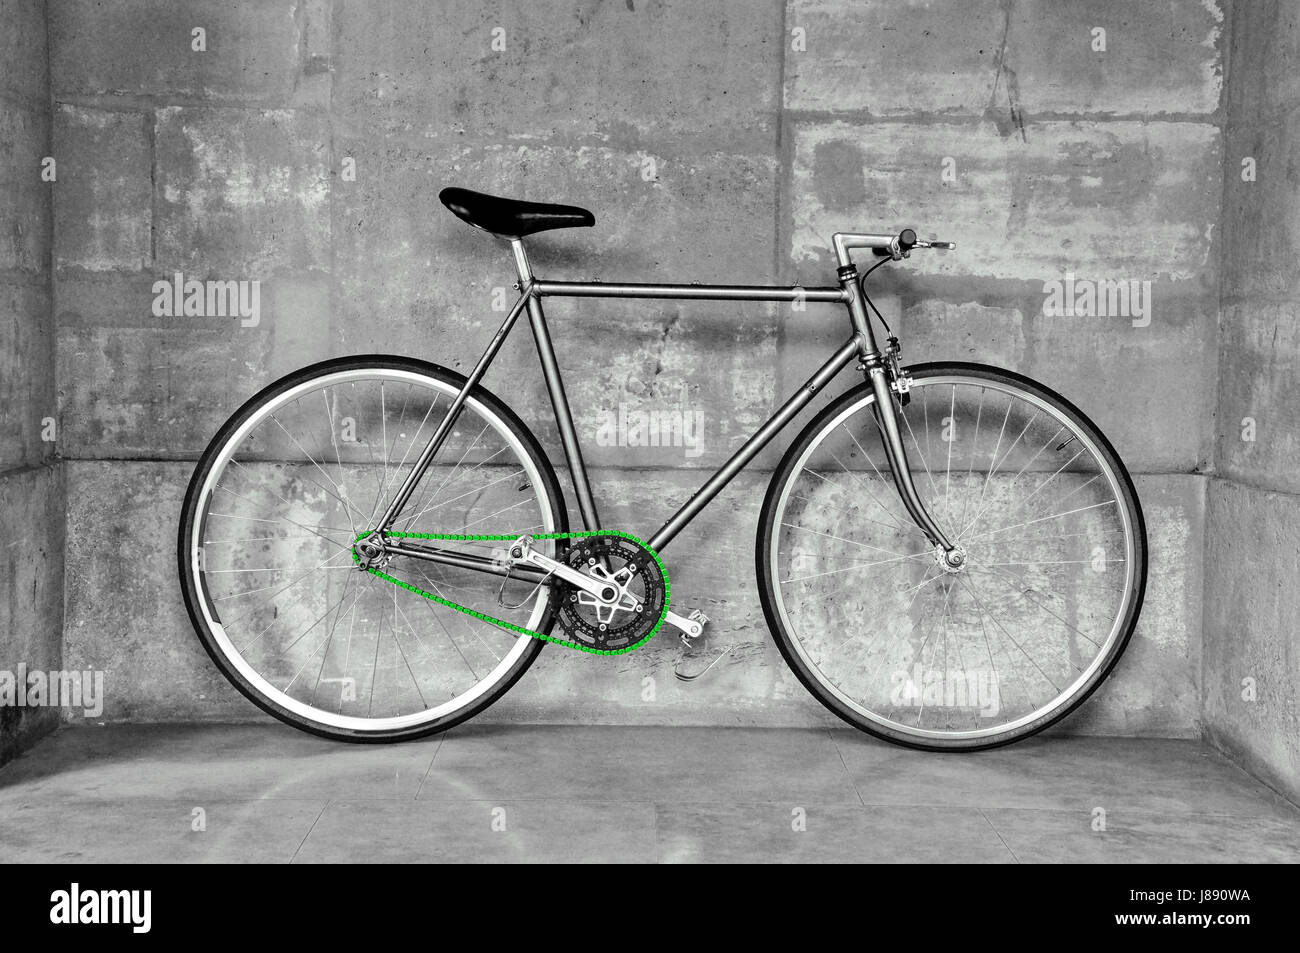 wheel, chain, bike, bicycle, cycle, cycling, biking, ride a bike, green, Stock Photo